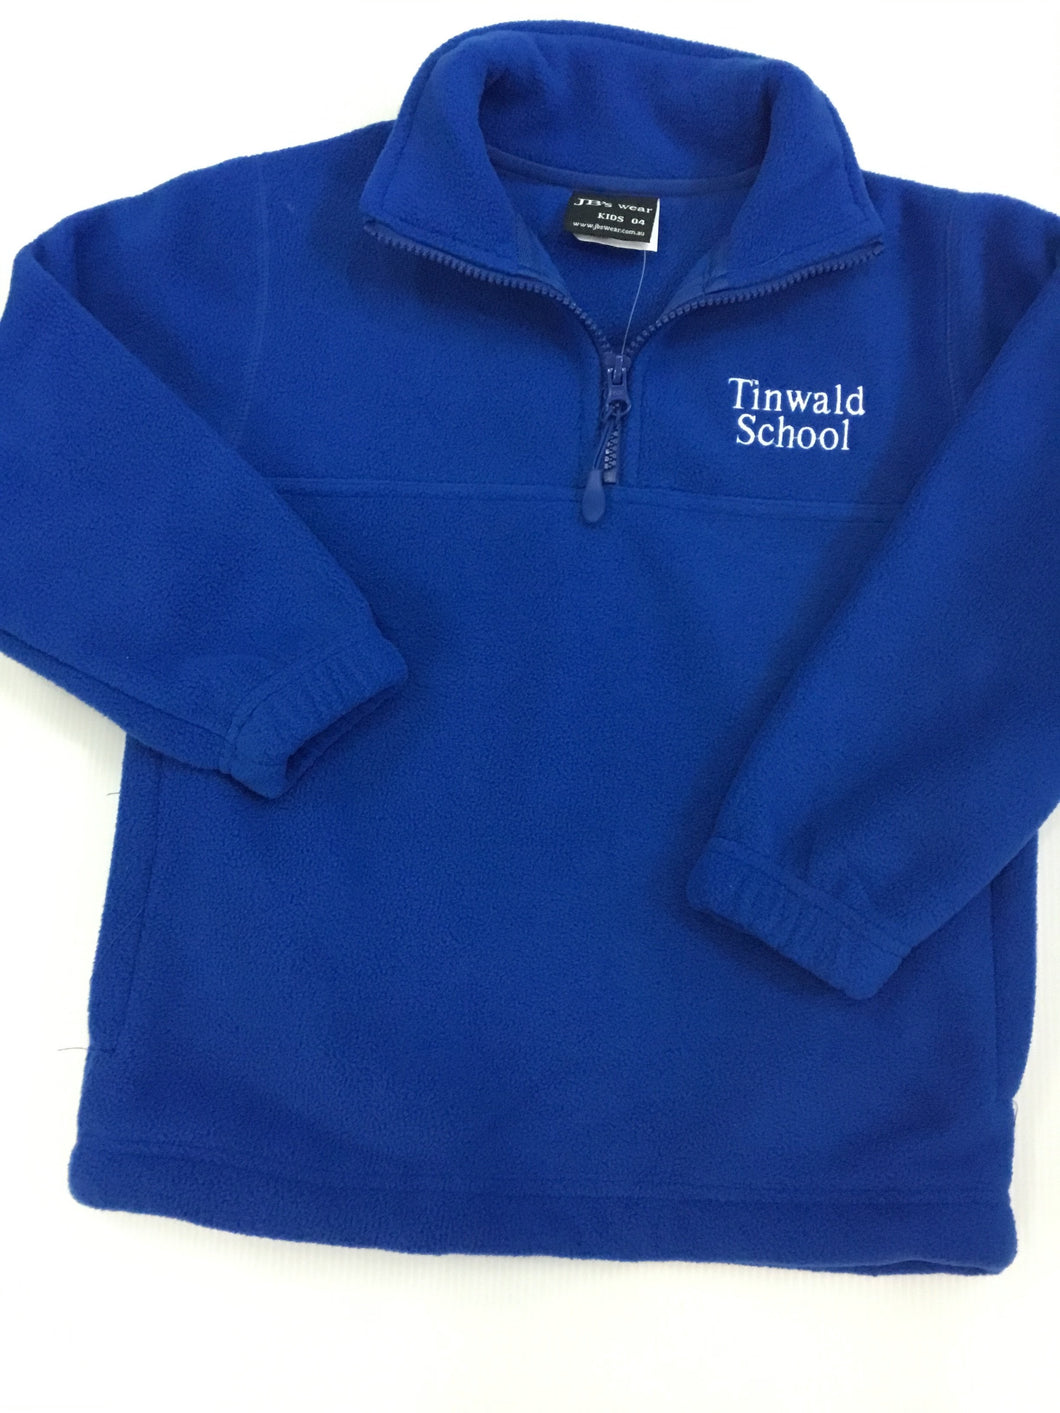 Tinwald School-Royal Blue 1/2 Zip Fleece